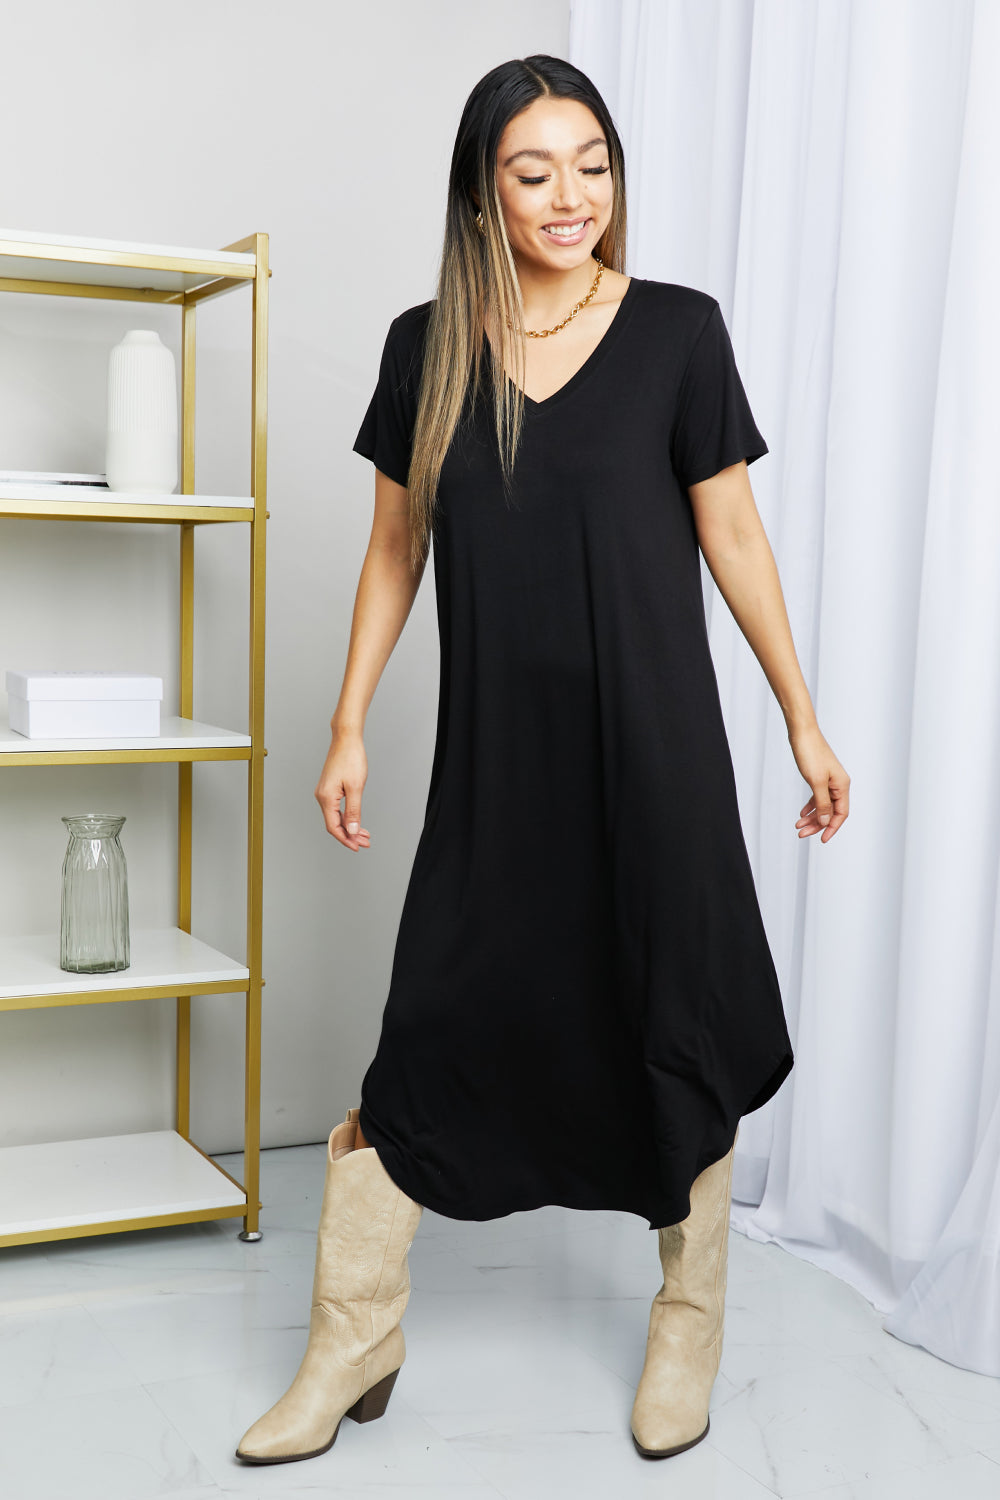 HYFVE V-Neck Short Sleeve Curved Hem Dress in Black | Dresses - CHANELIA